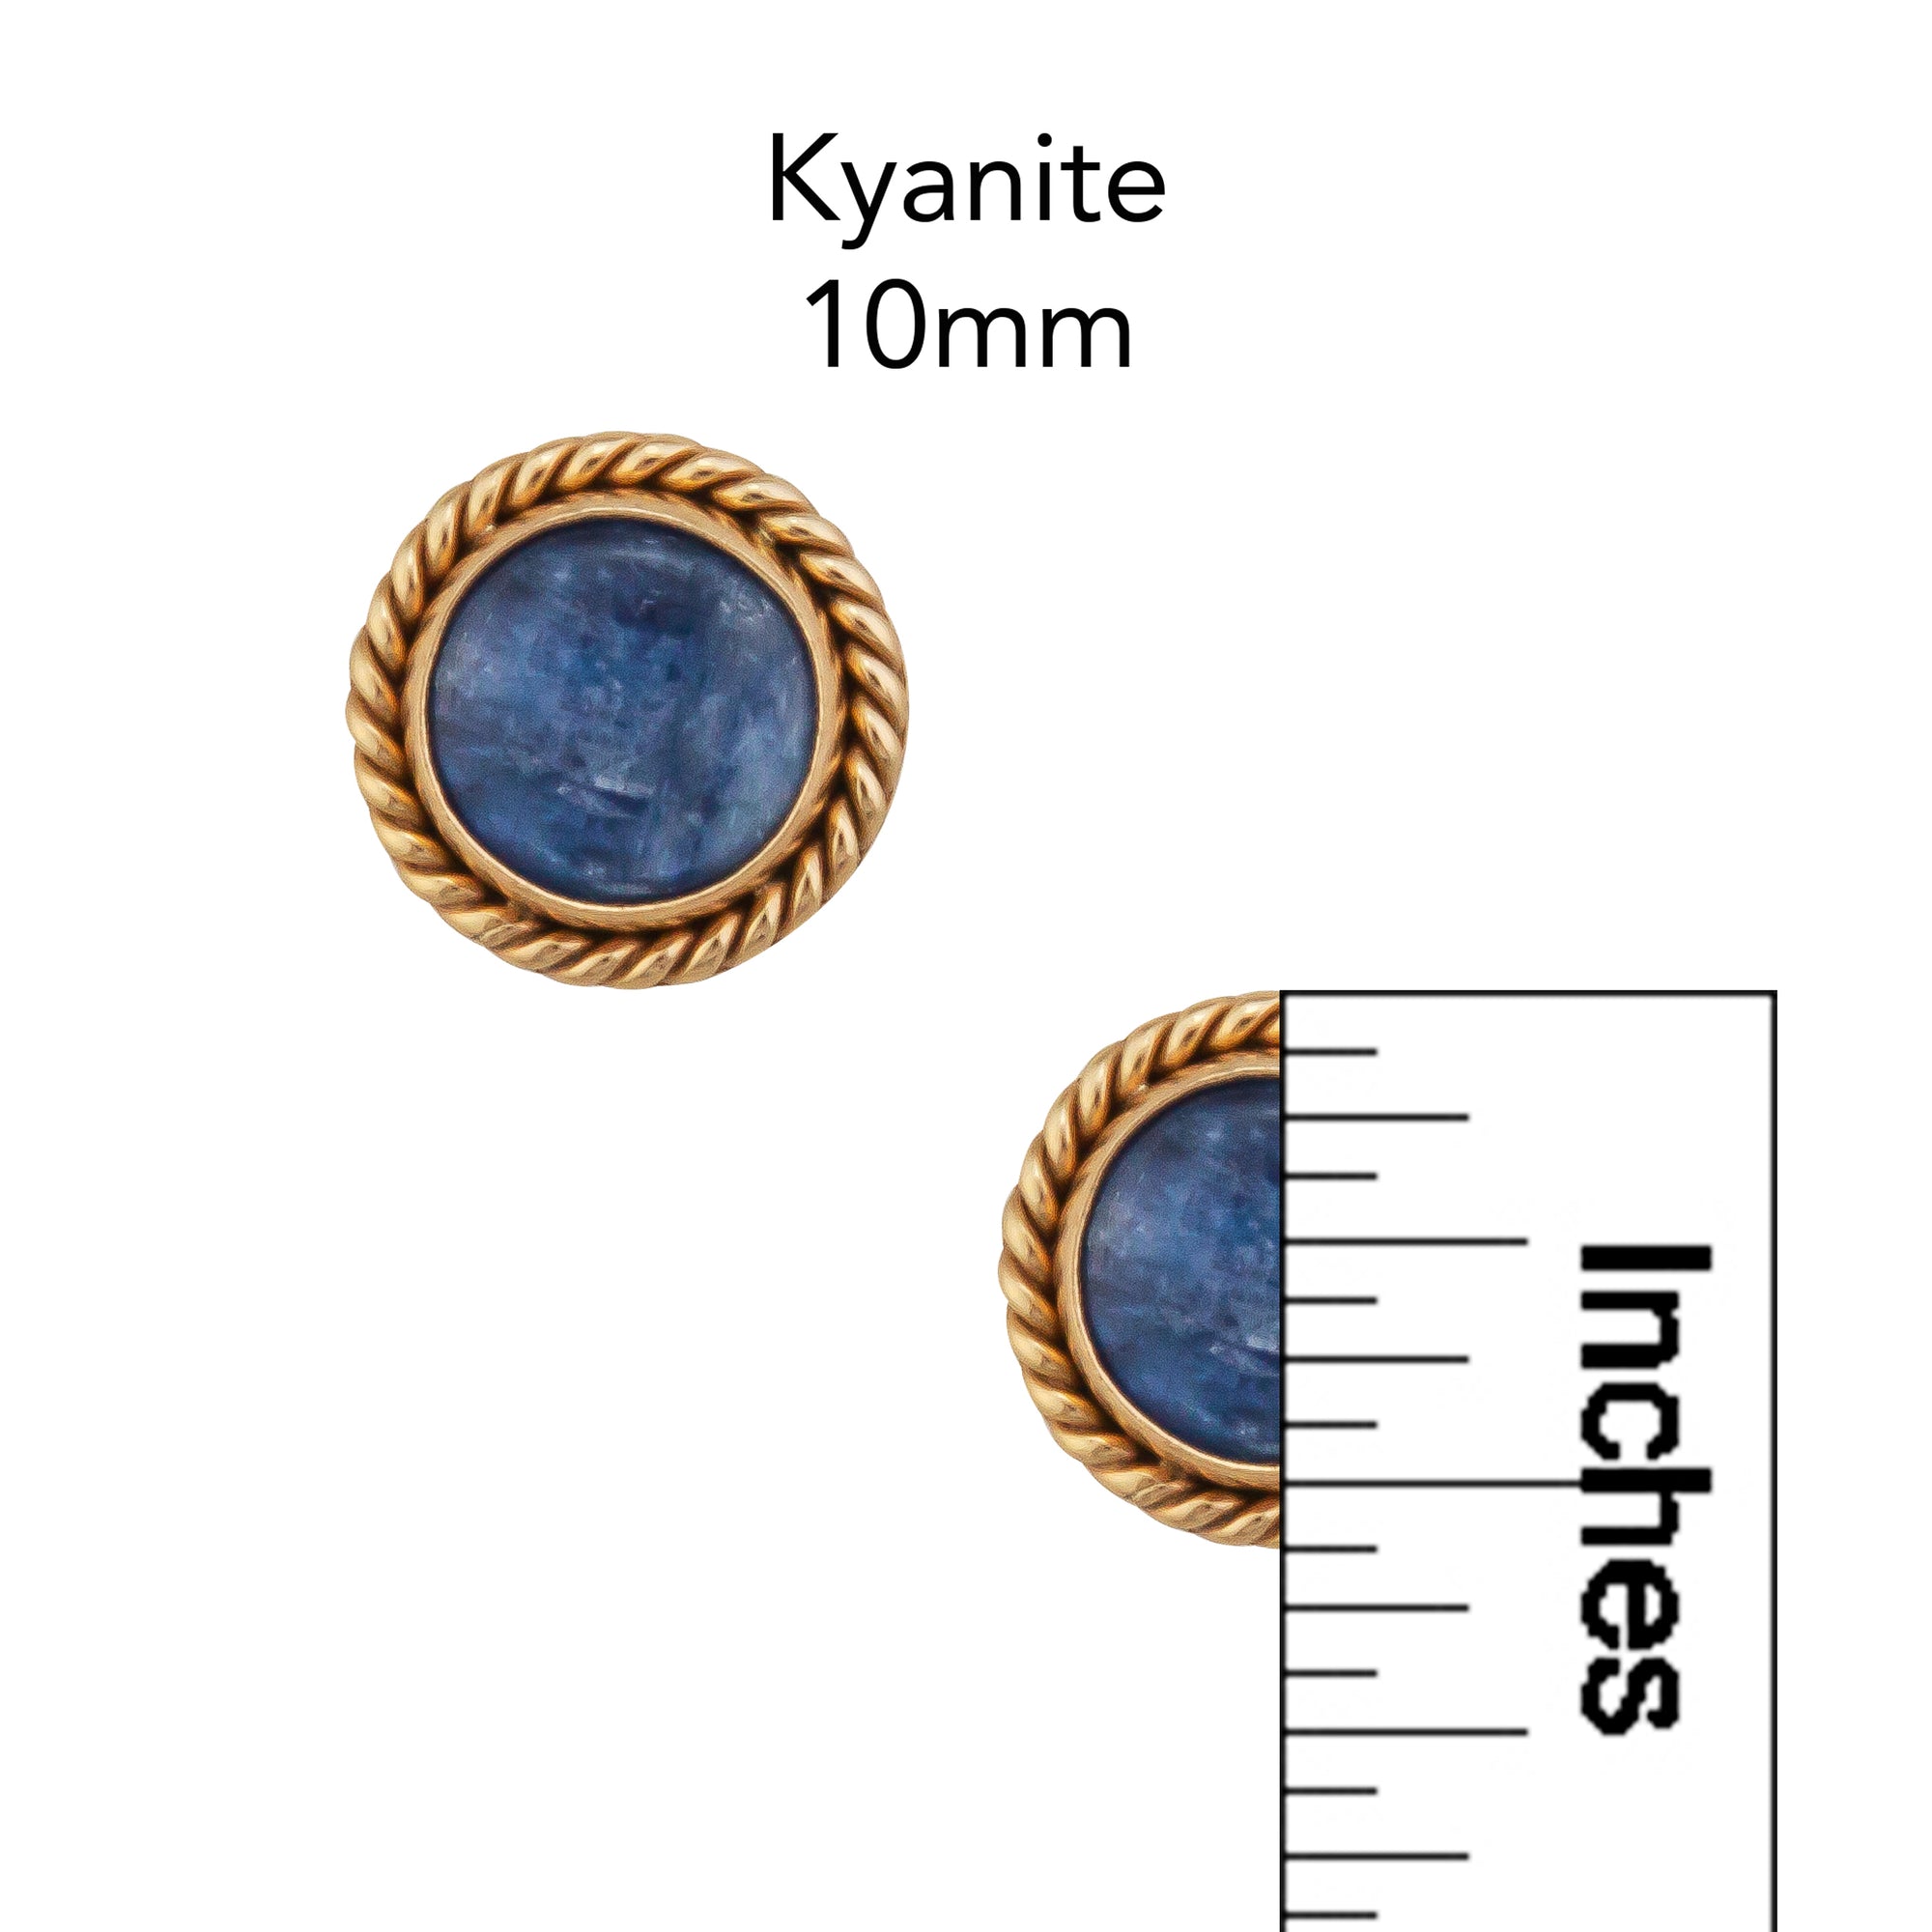 Alchemia Kyanite Post Earring with Rope Detail | Charles Albert Jewelry